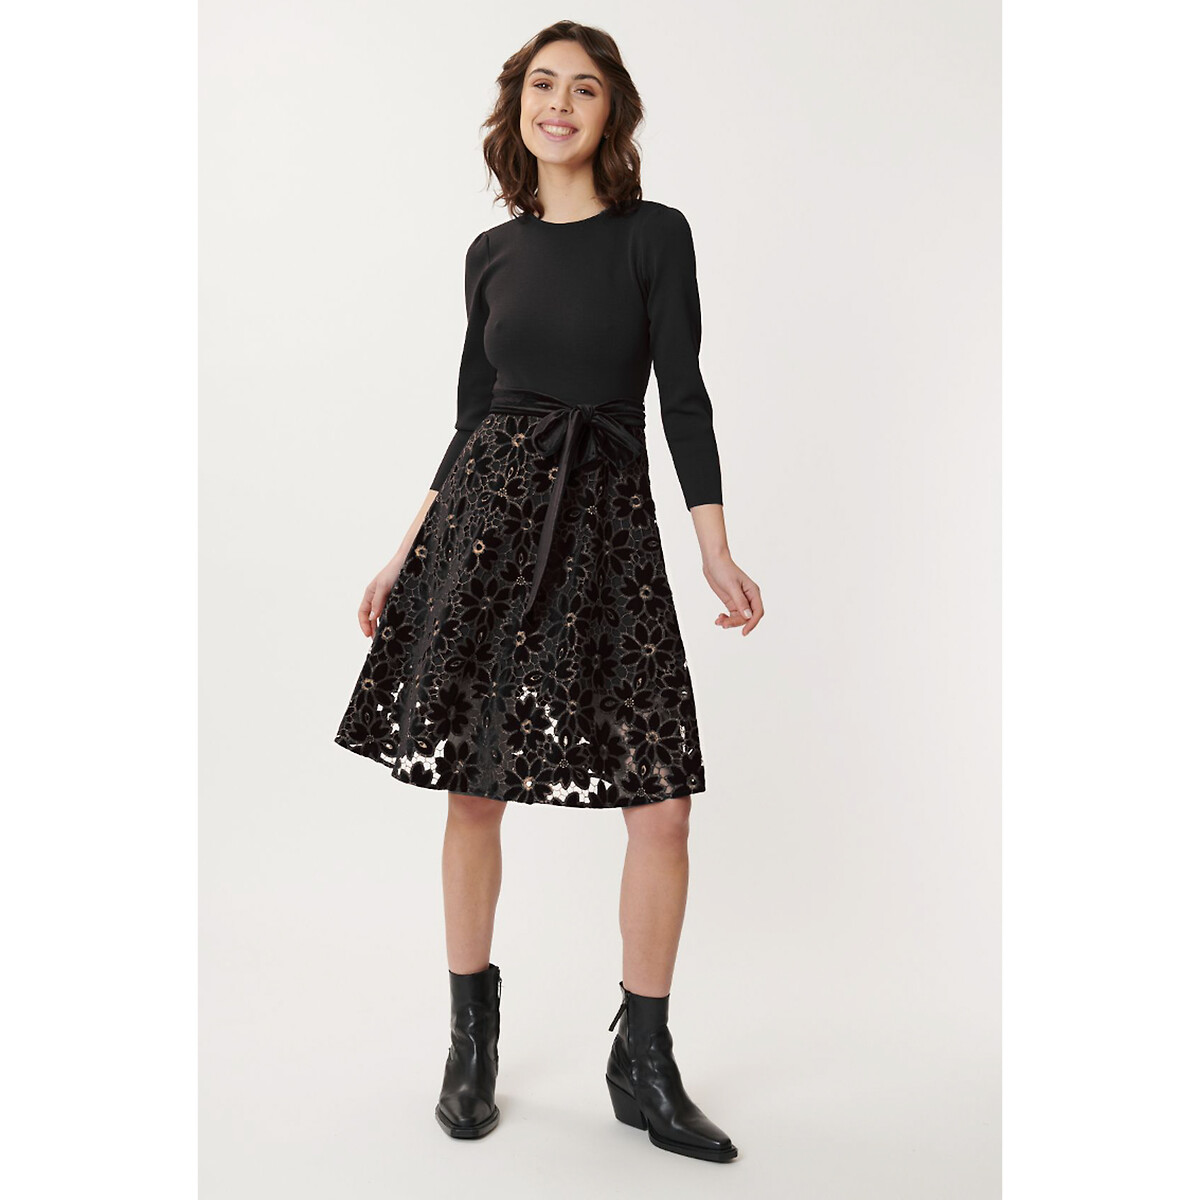 Damgan Jersey/Velvet Dress with Embroidered, Openwork Skirt